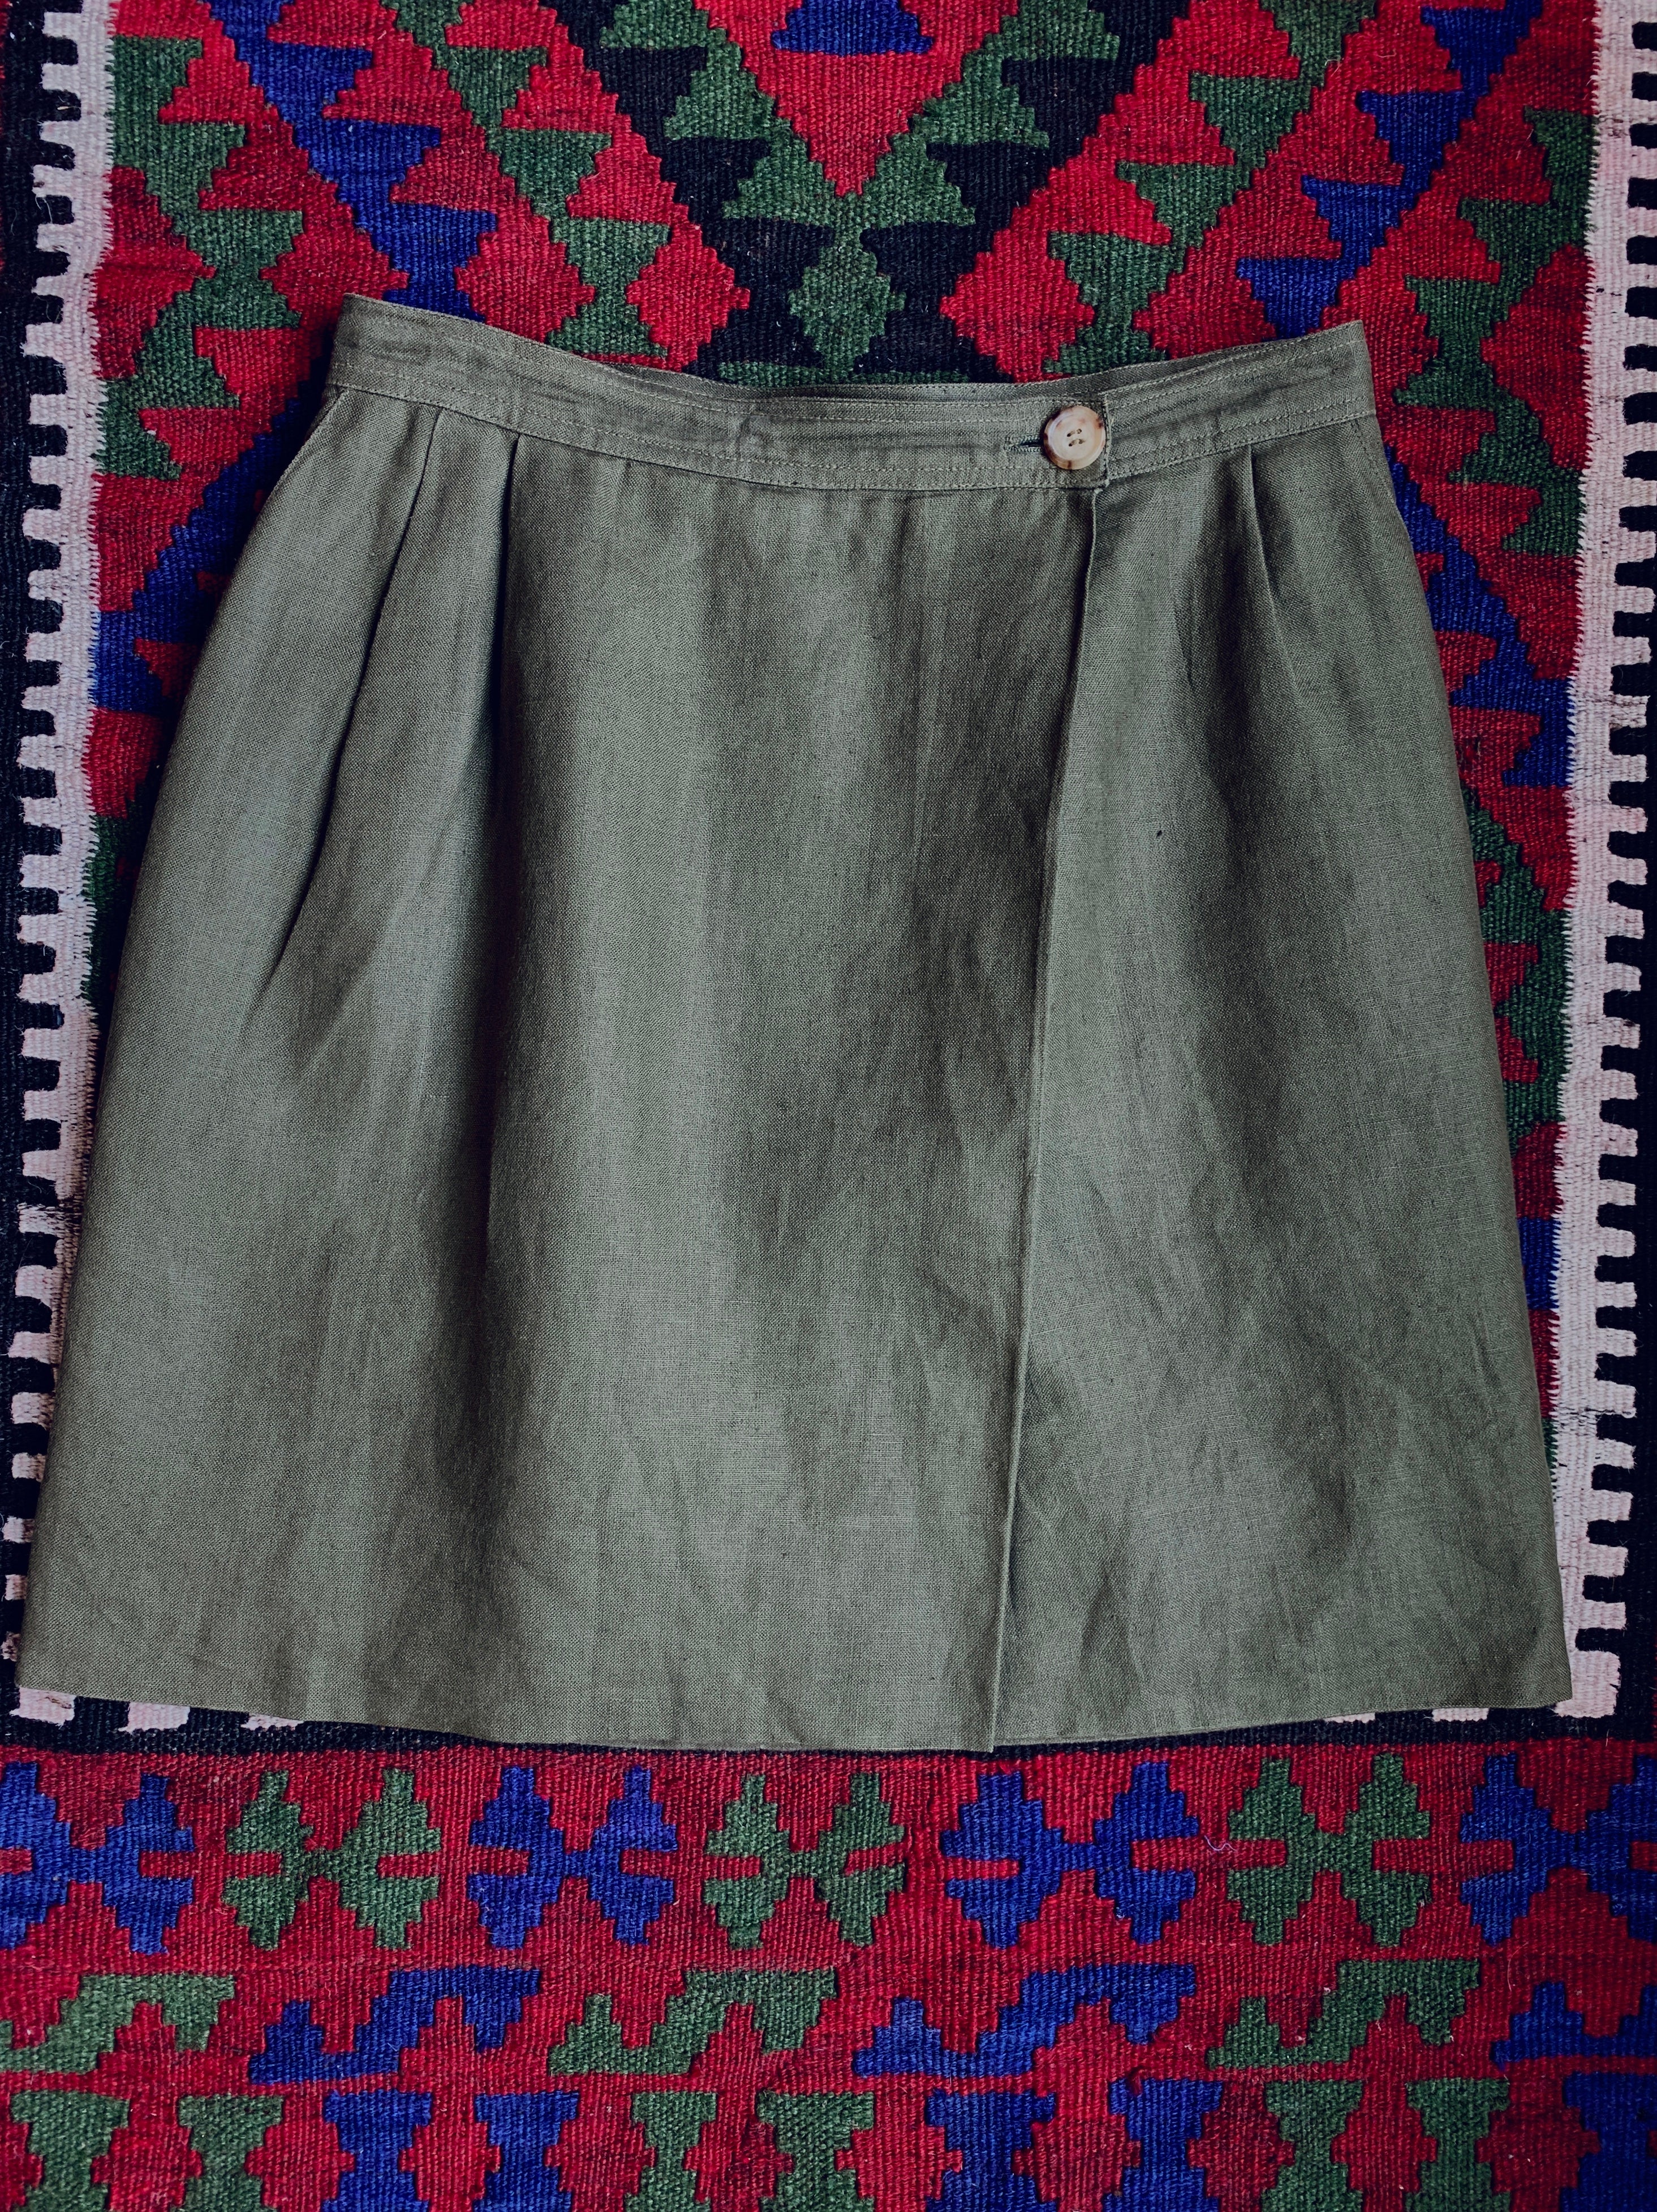 Yves Saint Laurent Rive Gauche Olive Linen Skirt with Pockets 